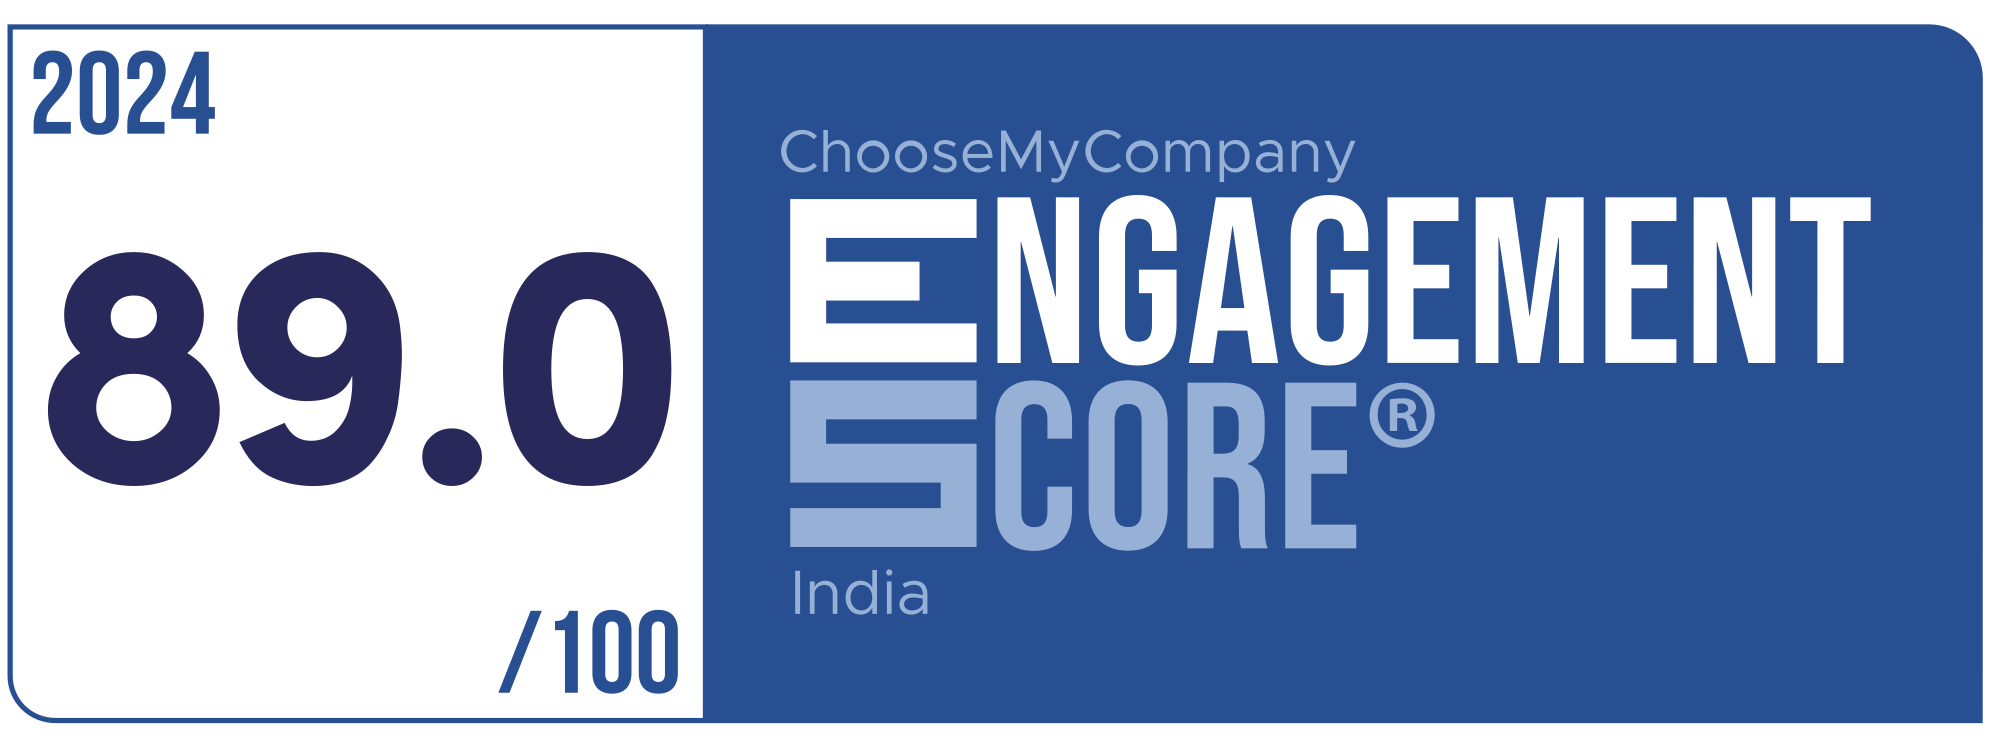 Label Engagement Score 2024 India